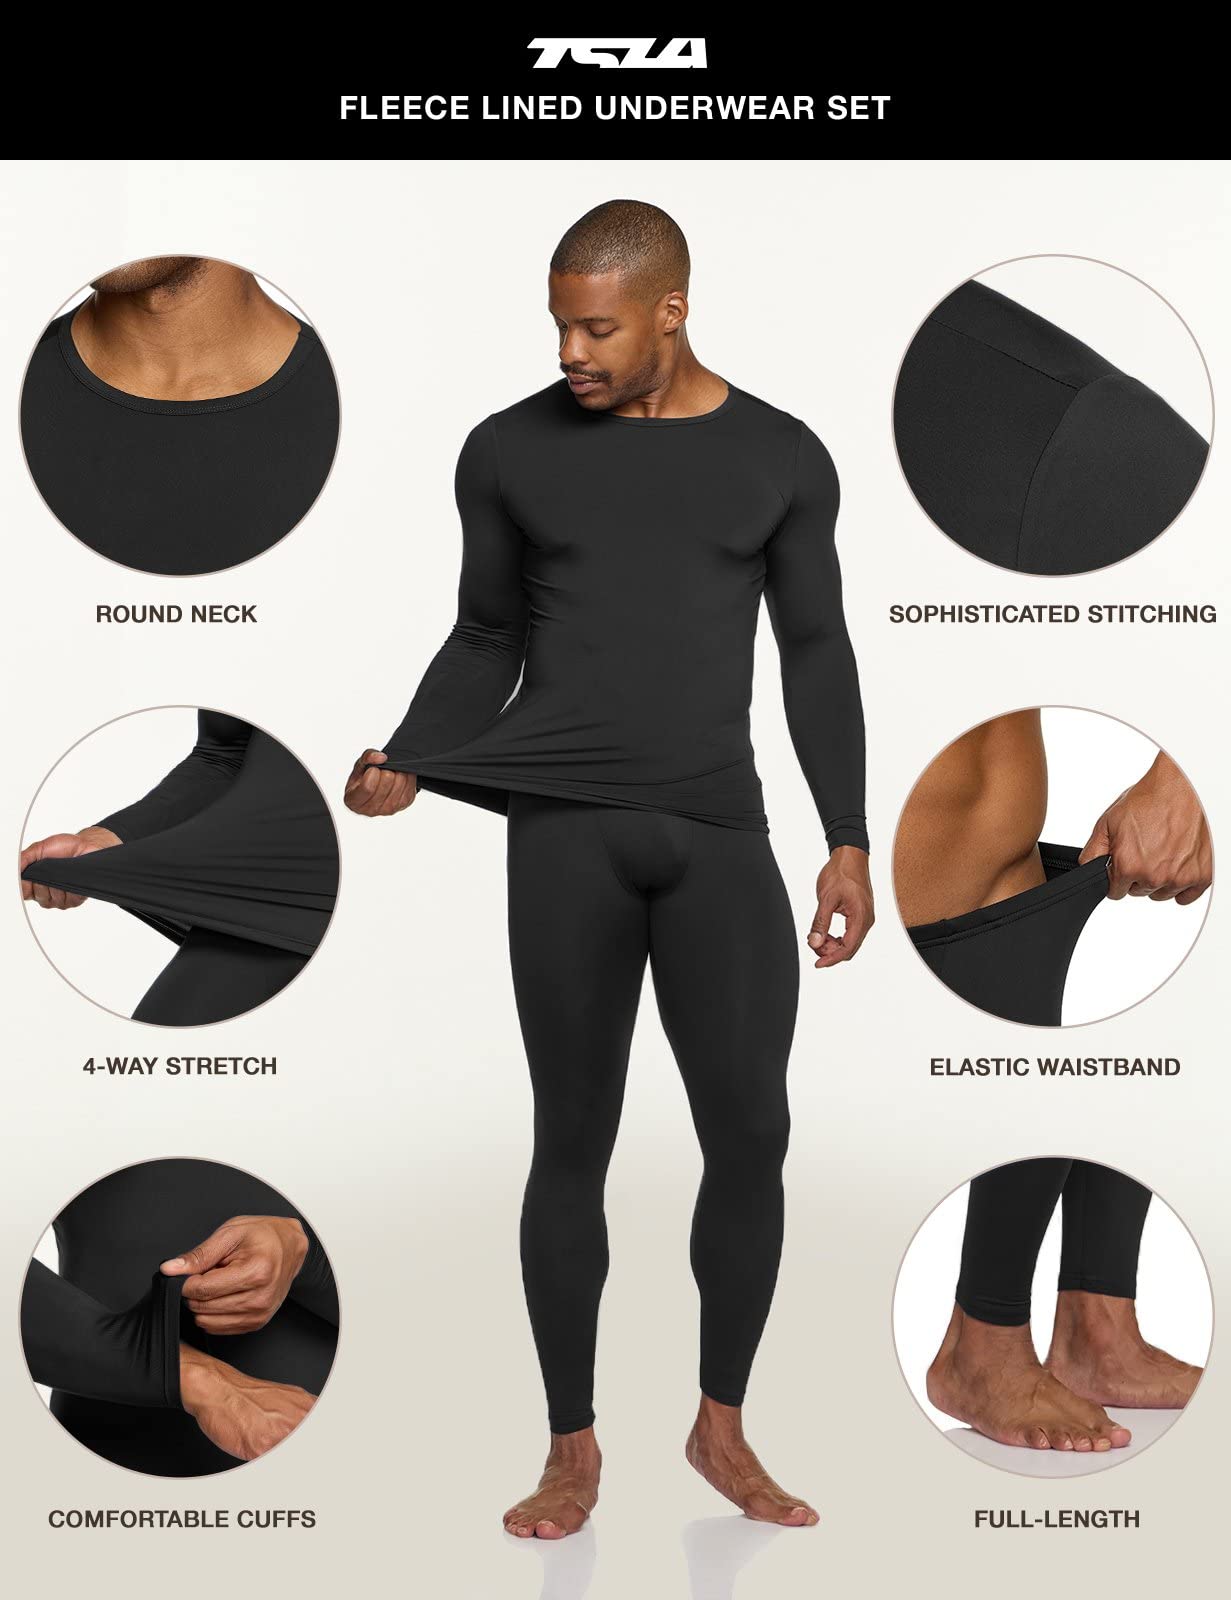 TSLA Men's Thermal Underwear Set, Microfiber Soft Fleece Lined Long Johns, Winter Warm Base Layer Top & Bottom, Soft Micro Fleece Black, Medium